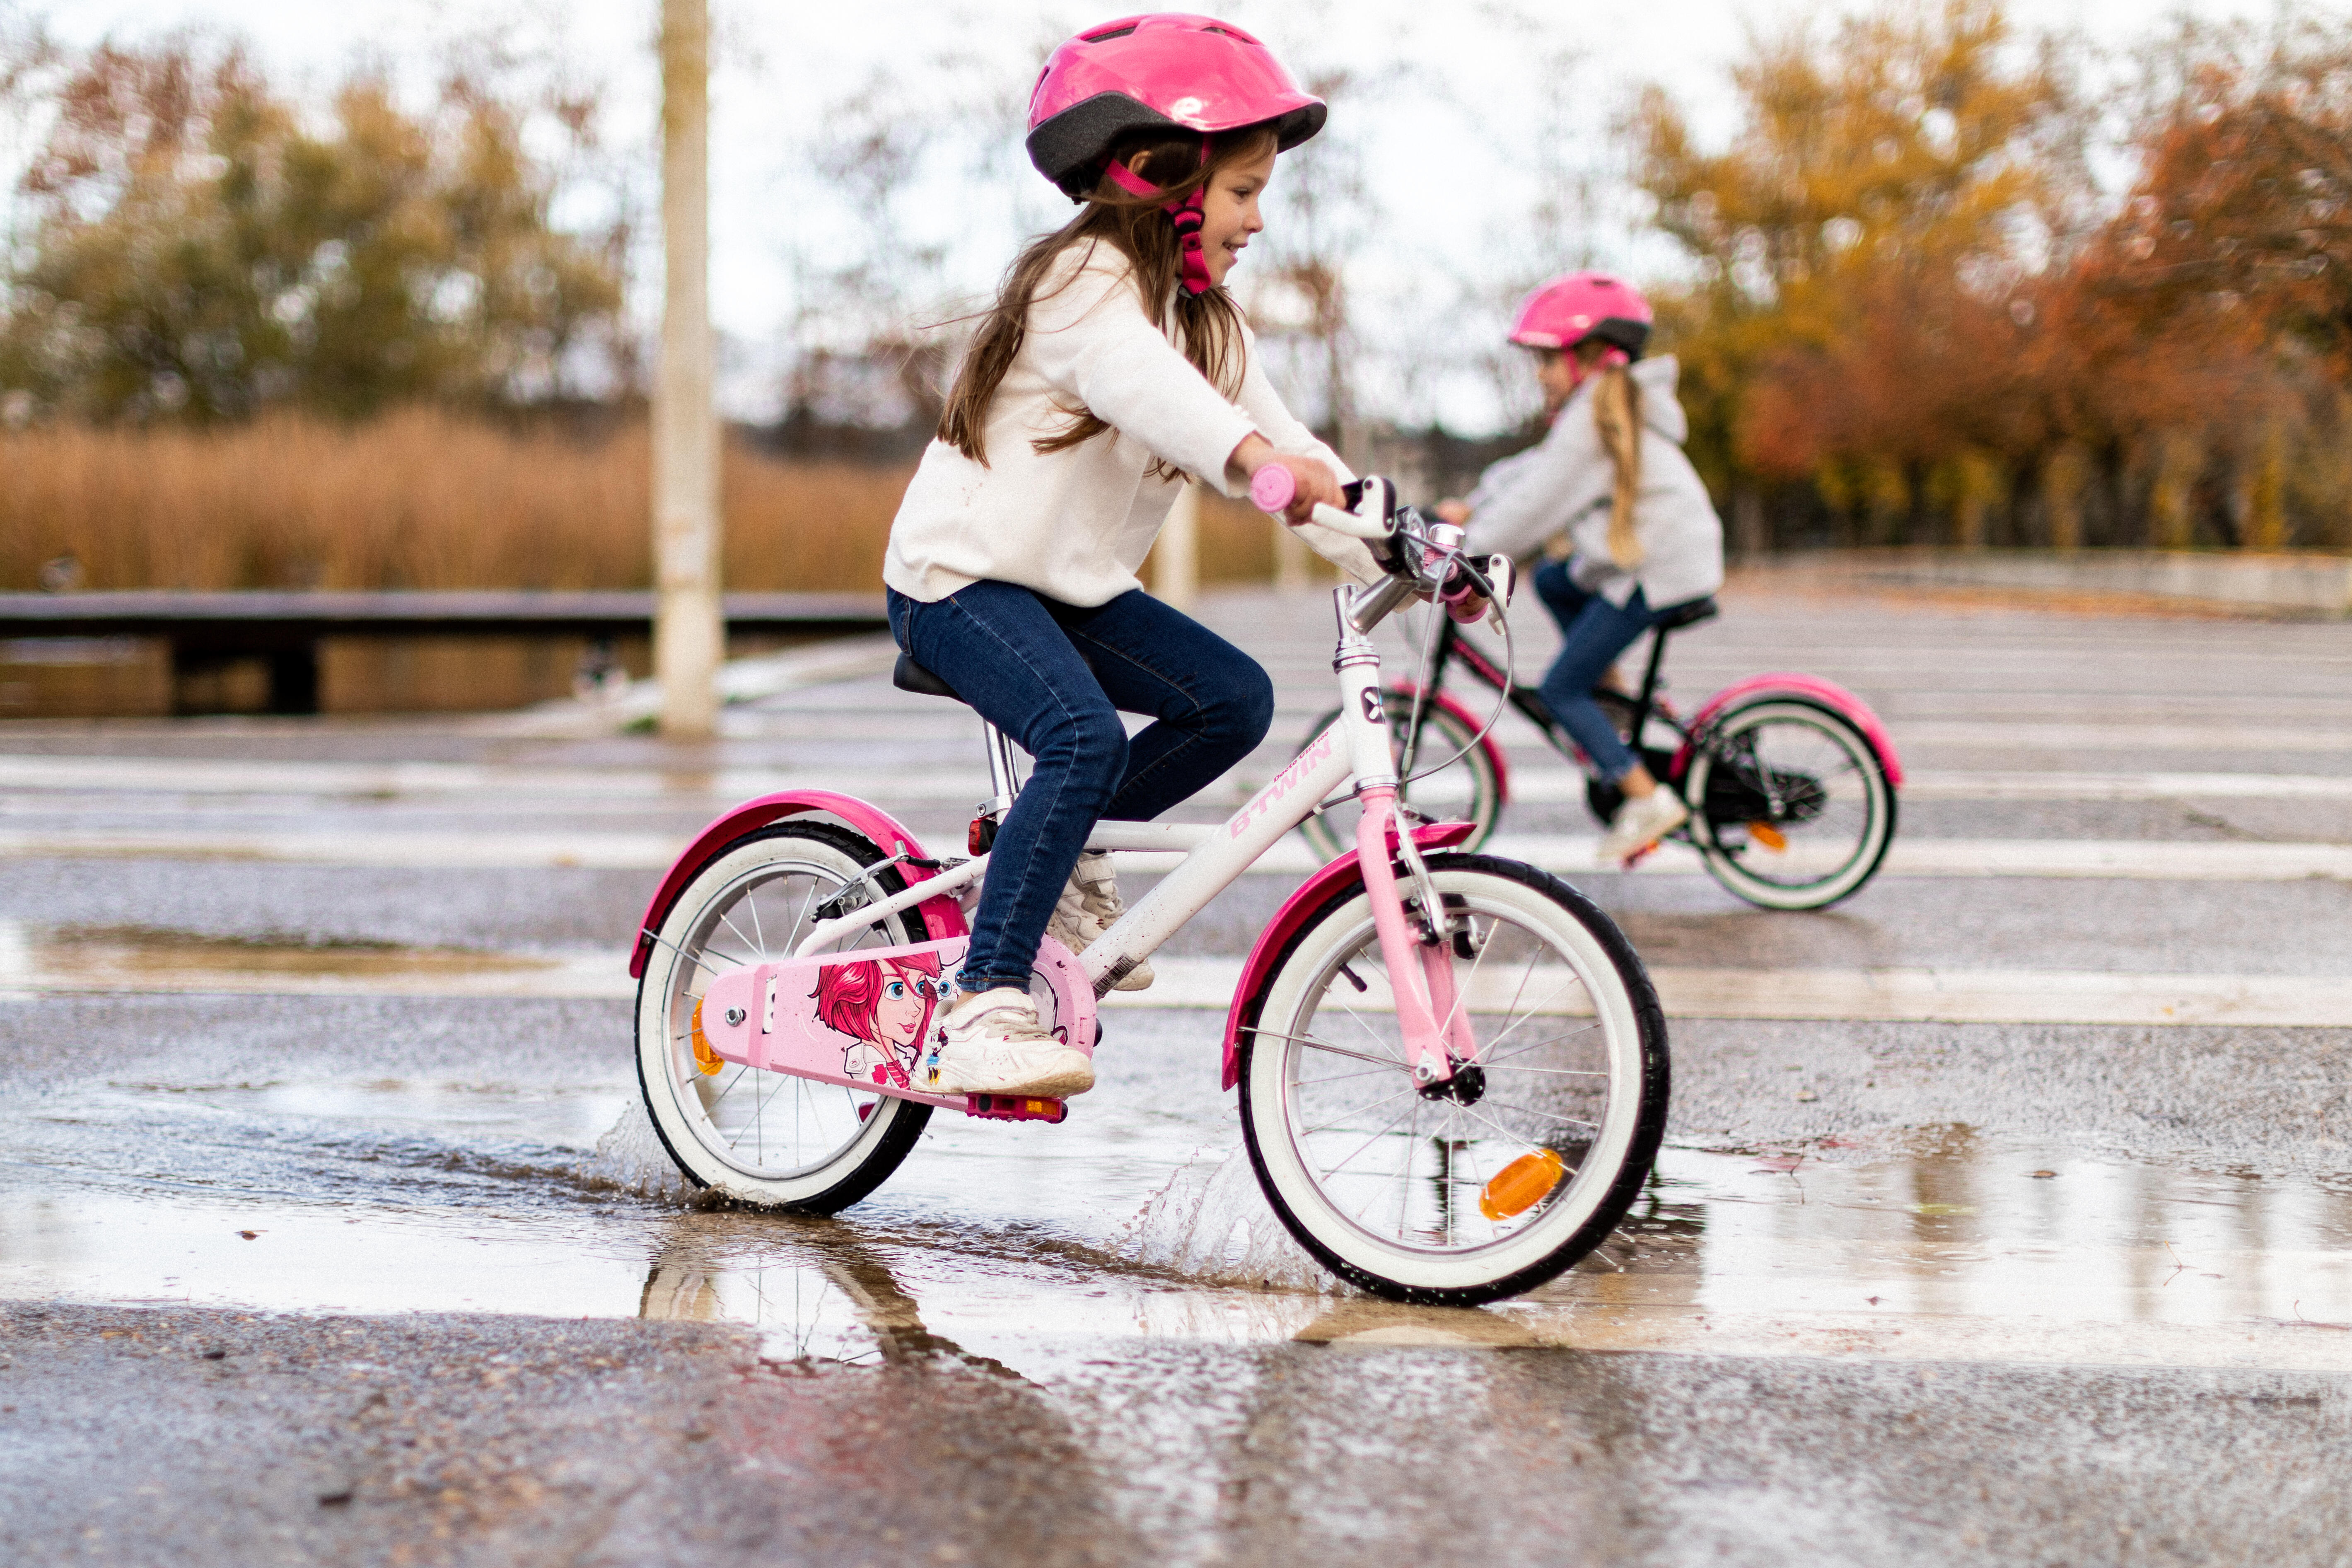 Kids' (4-6 years) Bike 16” - HYC 500 - BTWIN